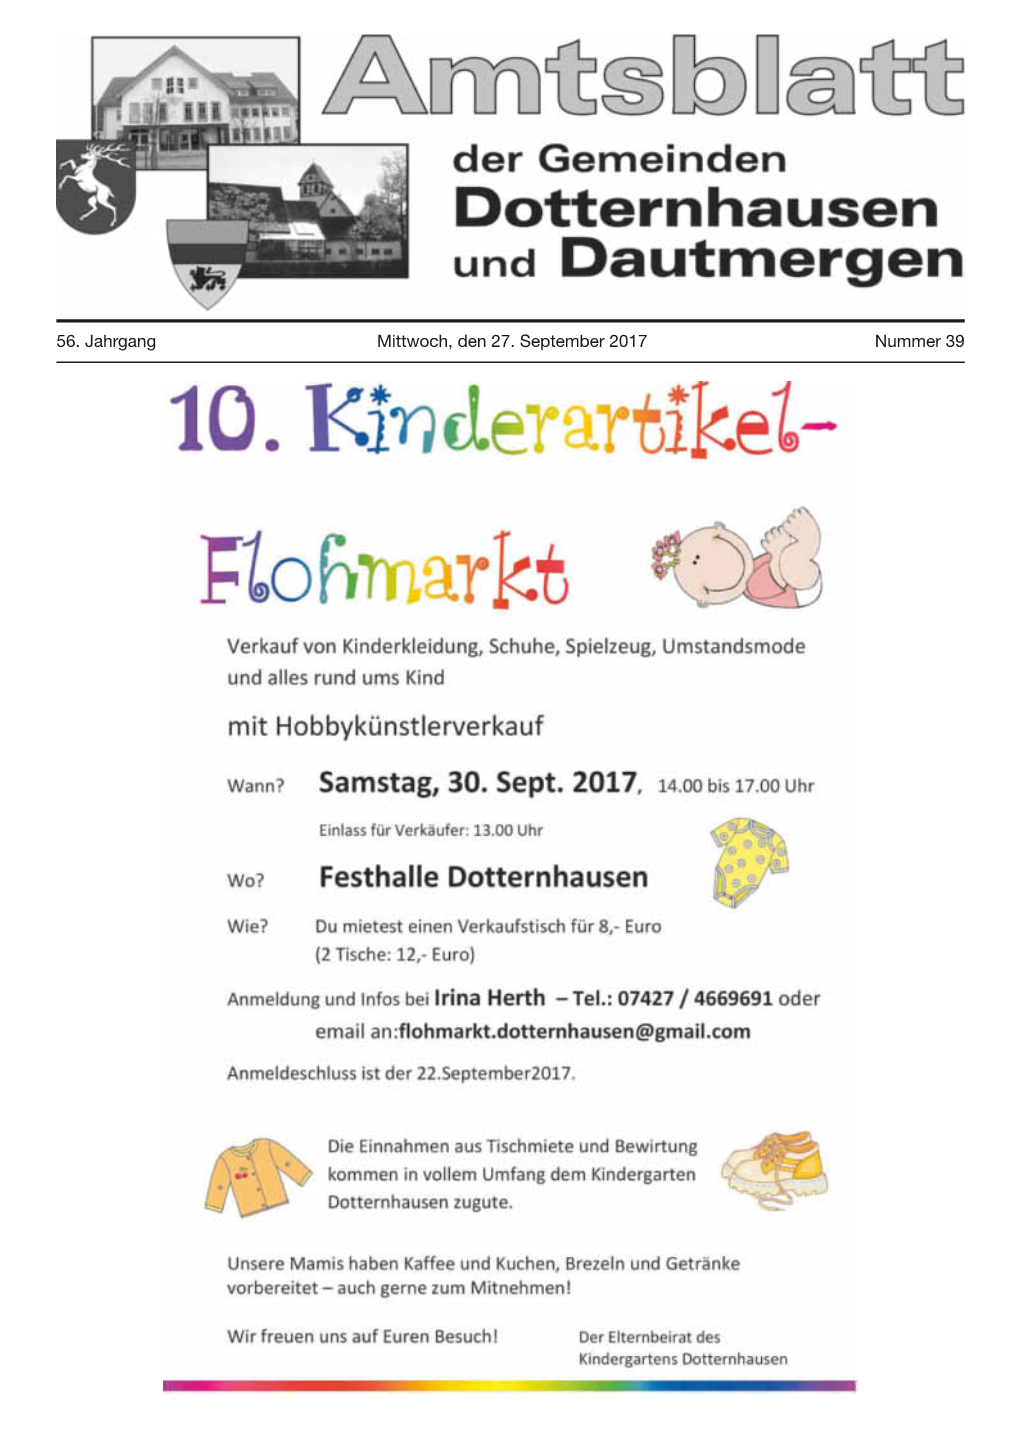 56. Jahrgang Mittwoch, Den 27. September 2017 Nummer 39 2 Amtsblatt Dotternhausen Dautmergen Nr